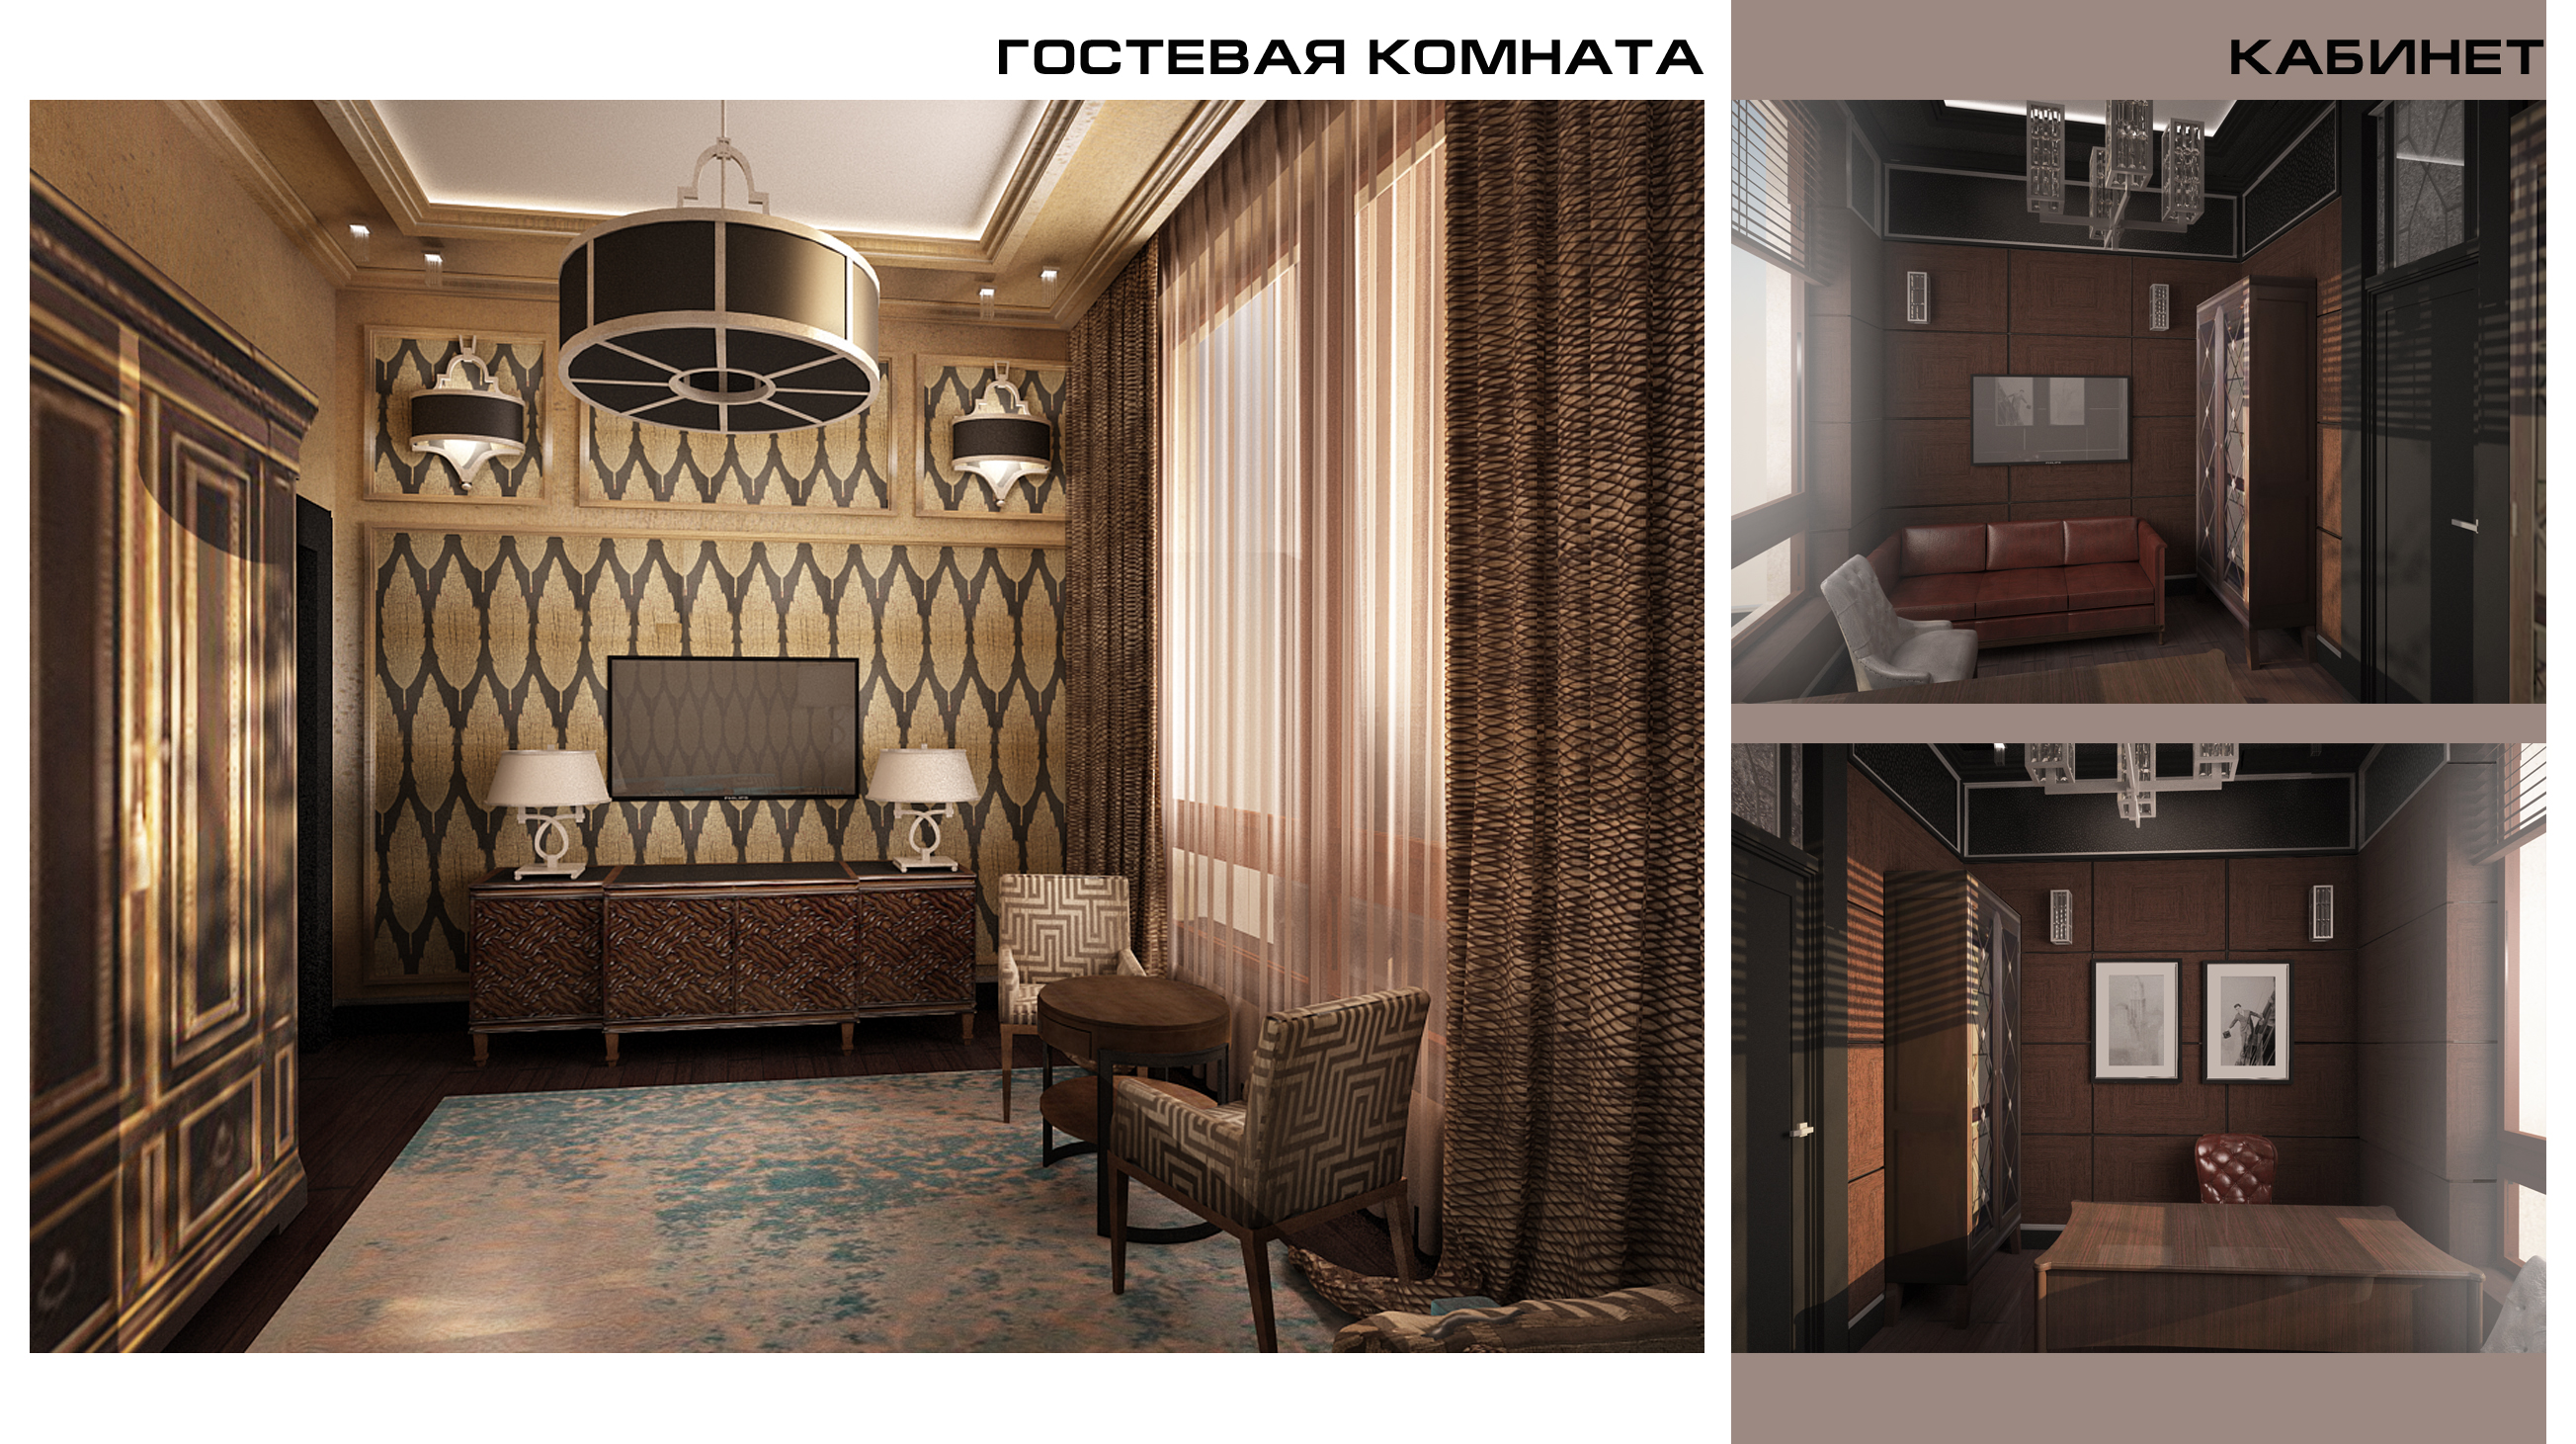 Дизайн-проект квартиры 161,7 м.кв., Москва, 2013 г.